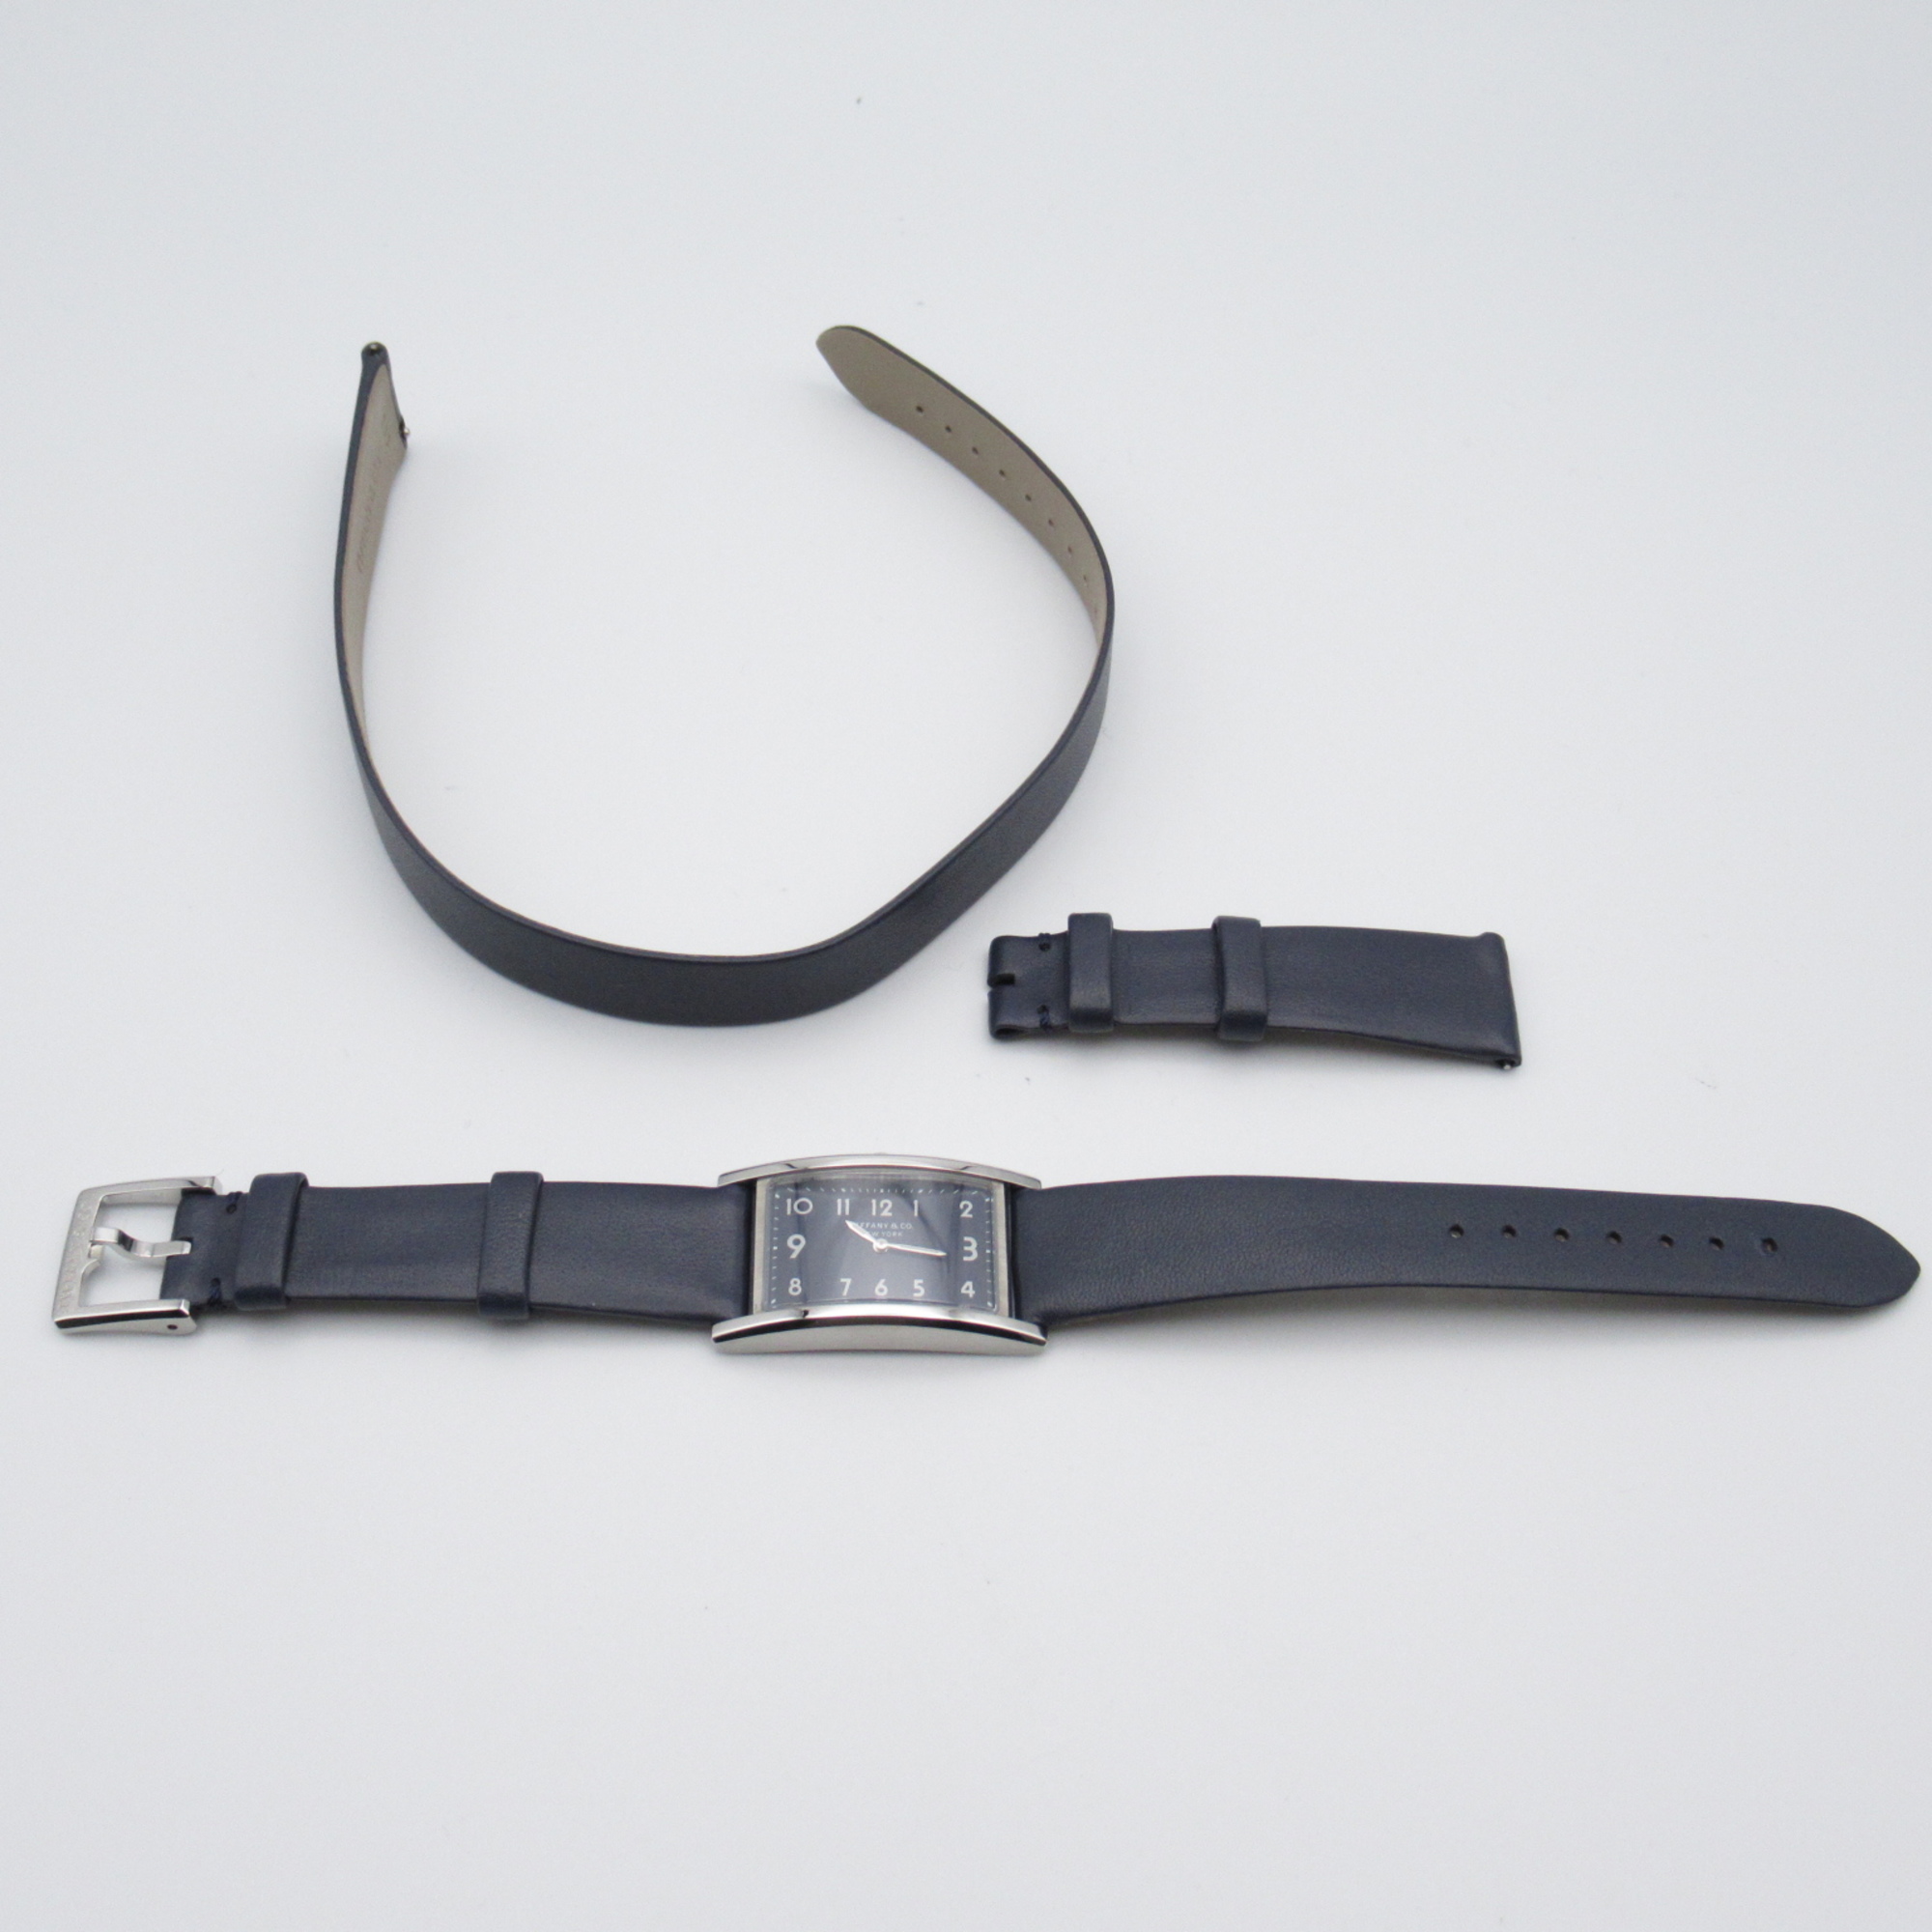 TIFFANY&CO East West Wrist Watch 34677344 Quartz Blue  Stainless Steel Leather belt 34677344